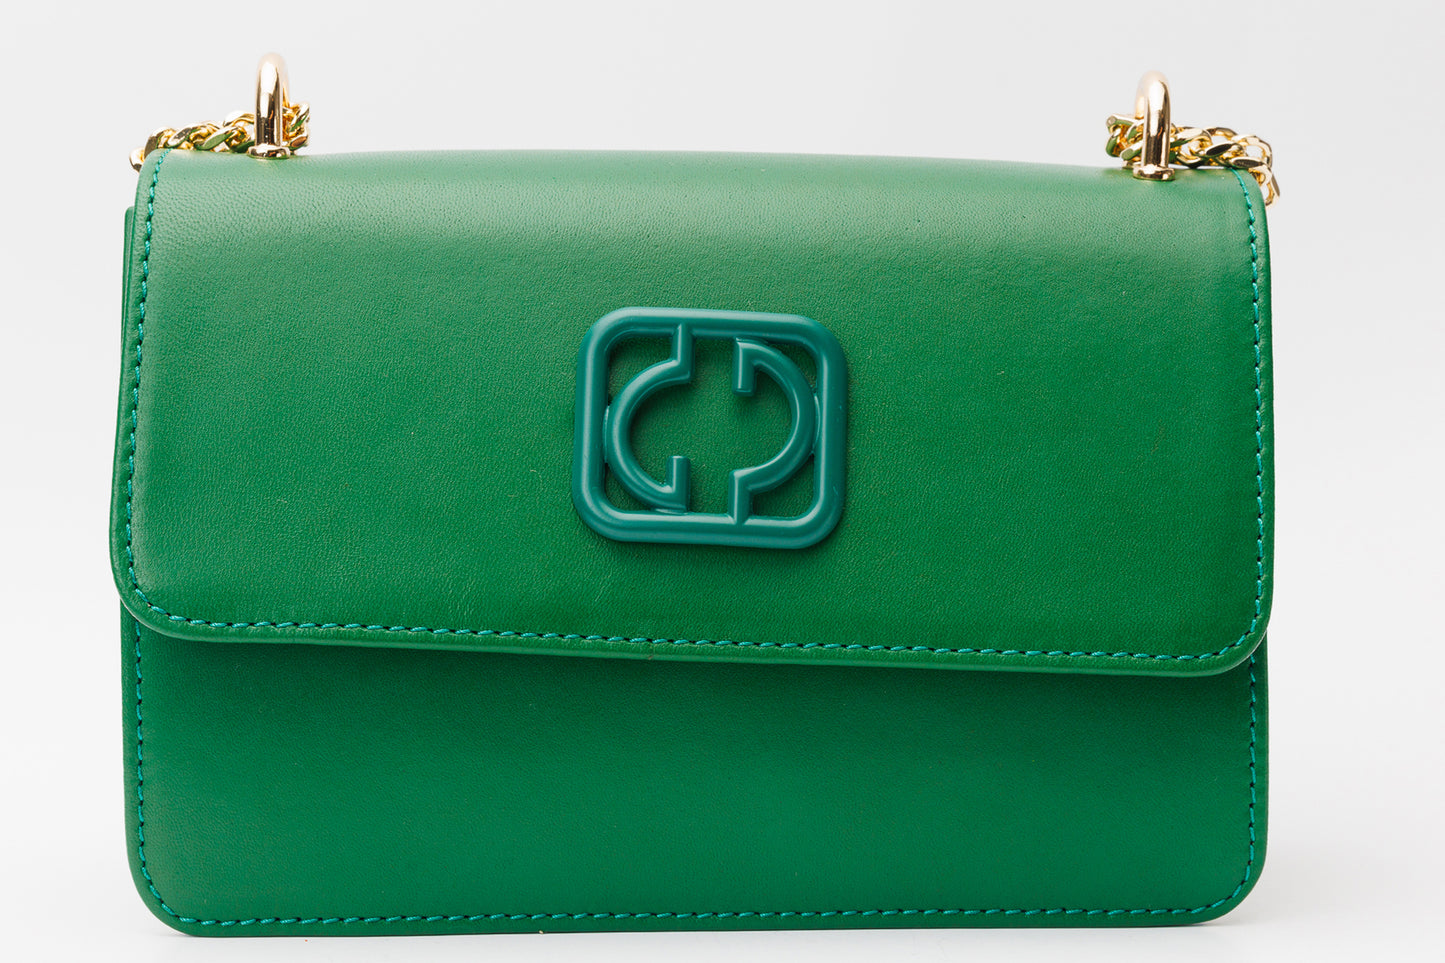 The Maneadero Green Leather Handbag